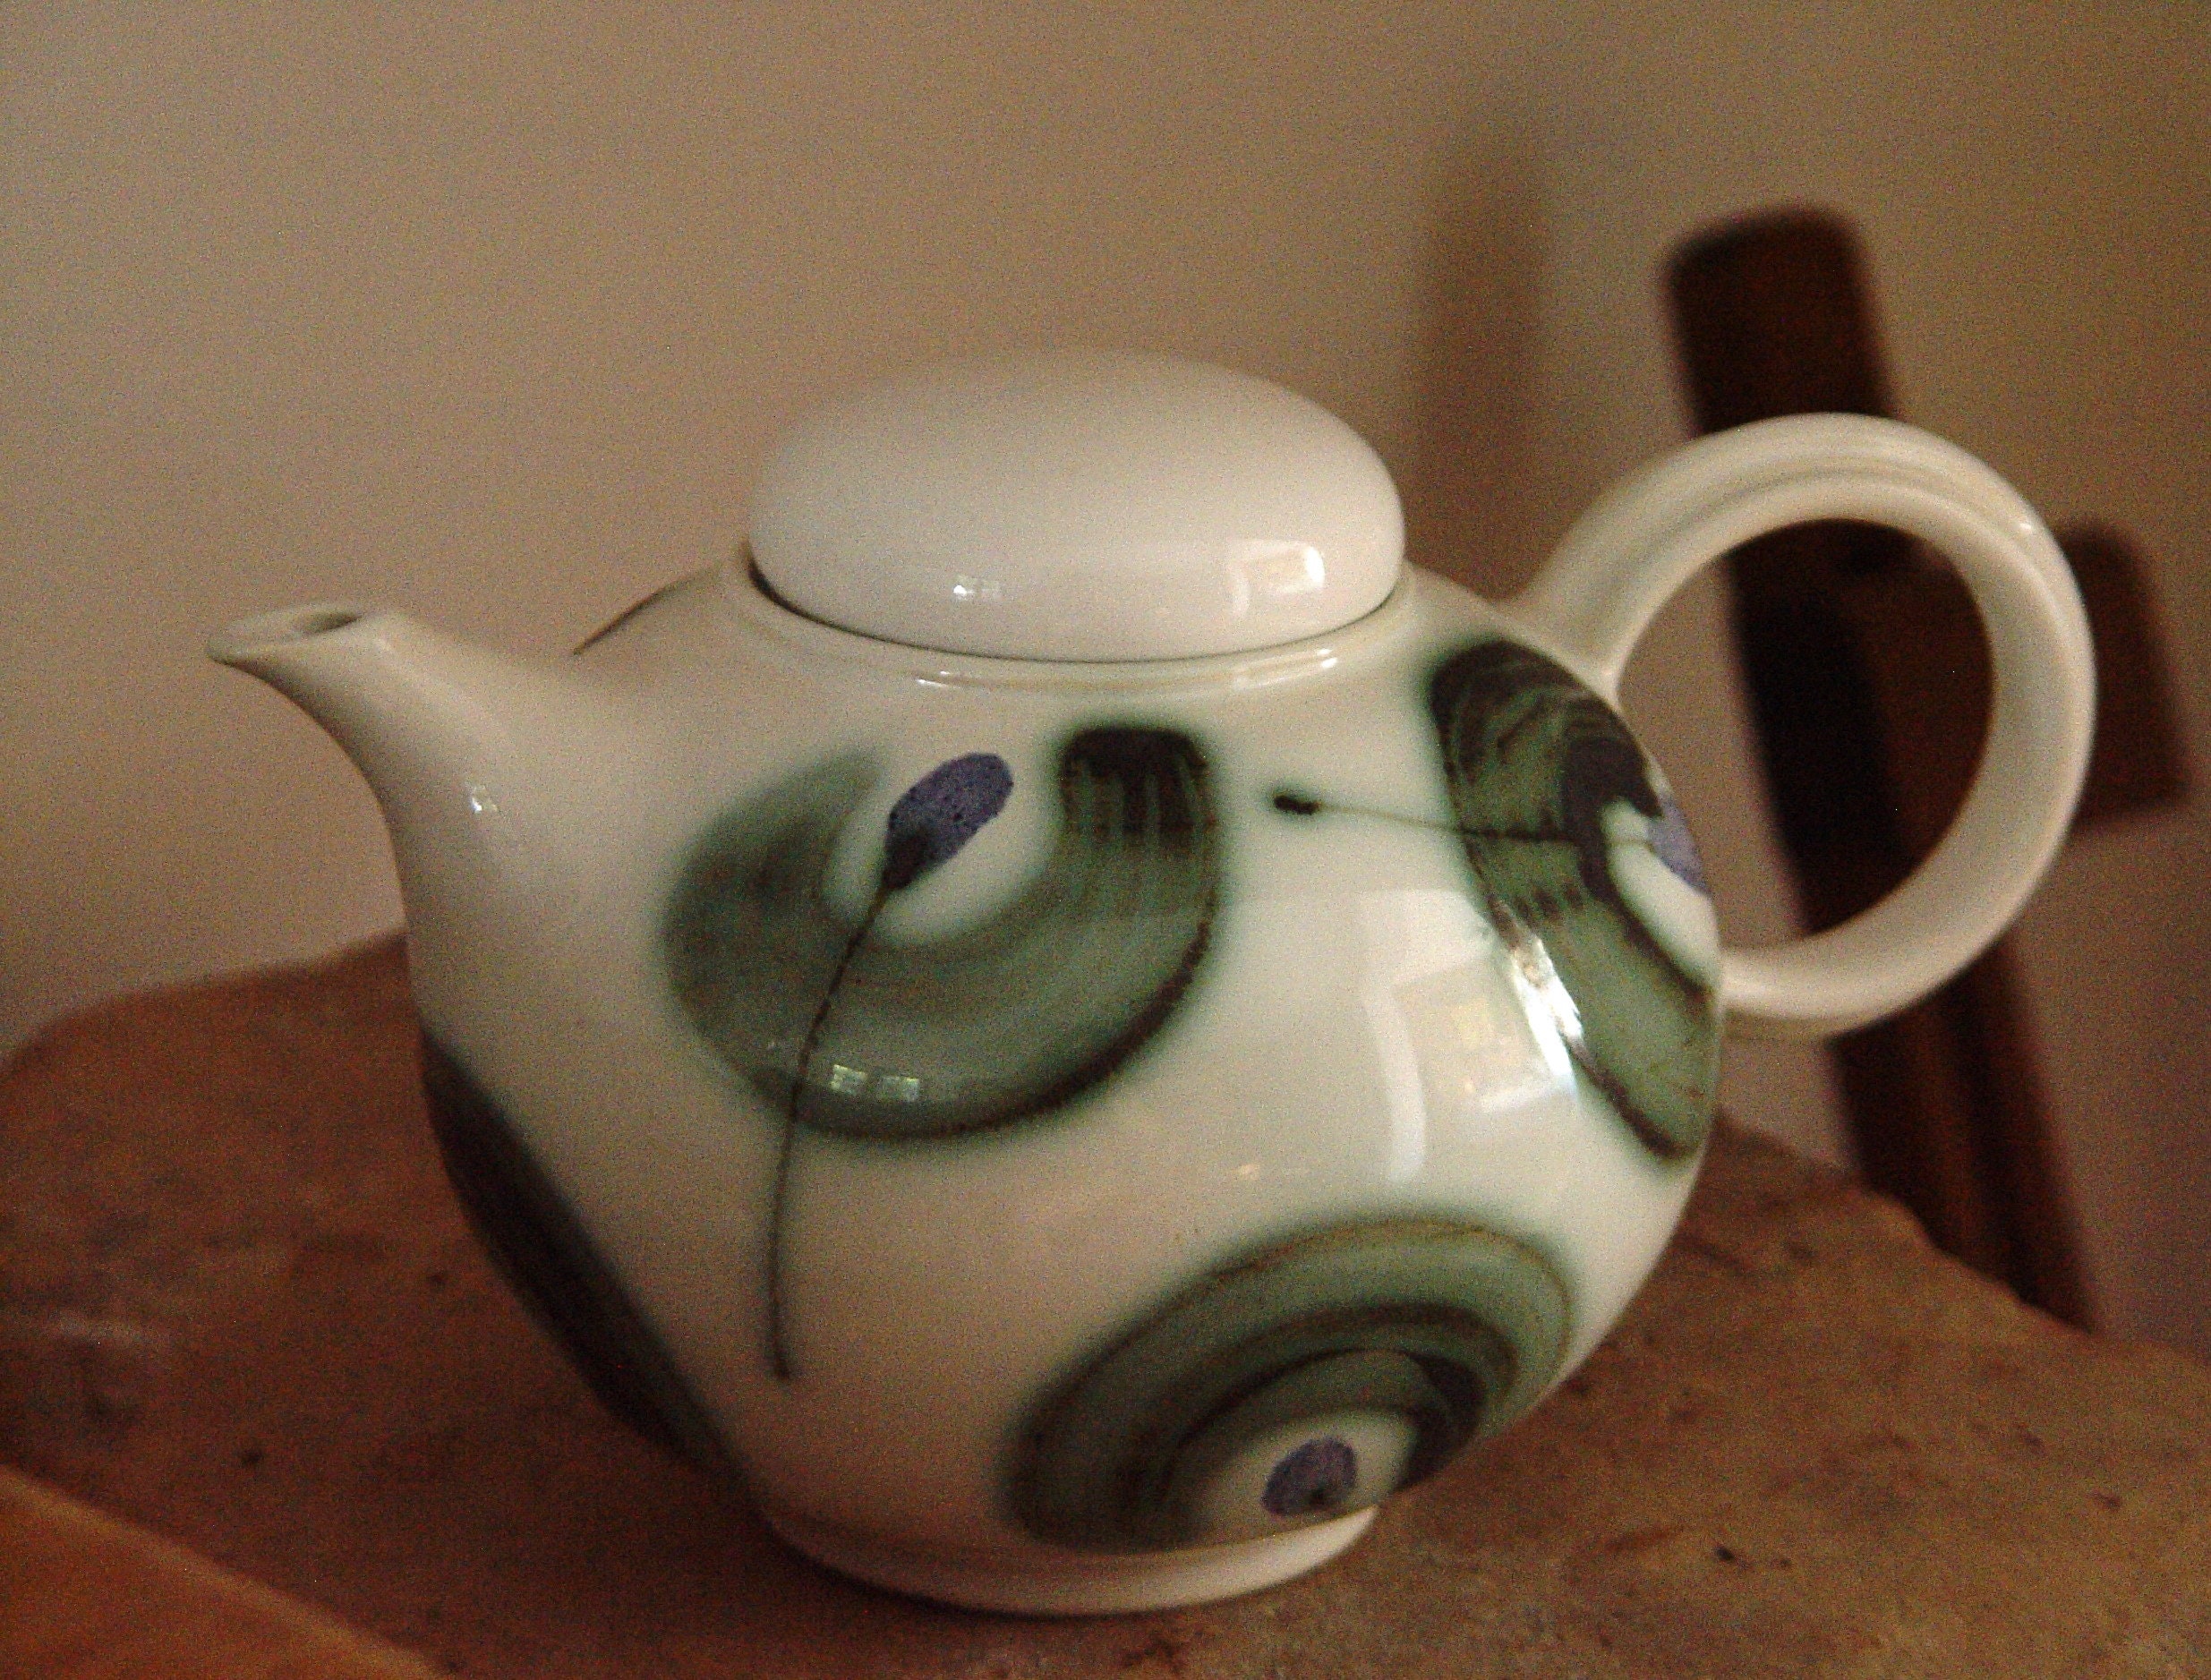 Ceramic Serving Teapot, Small Pottery Tea Pot. Kitchen Decoration, Home  Decor, Handmade Pottery, Ceramic art, Unique Pottery Teapot, Danko